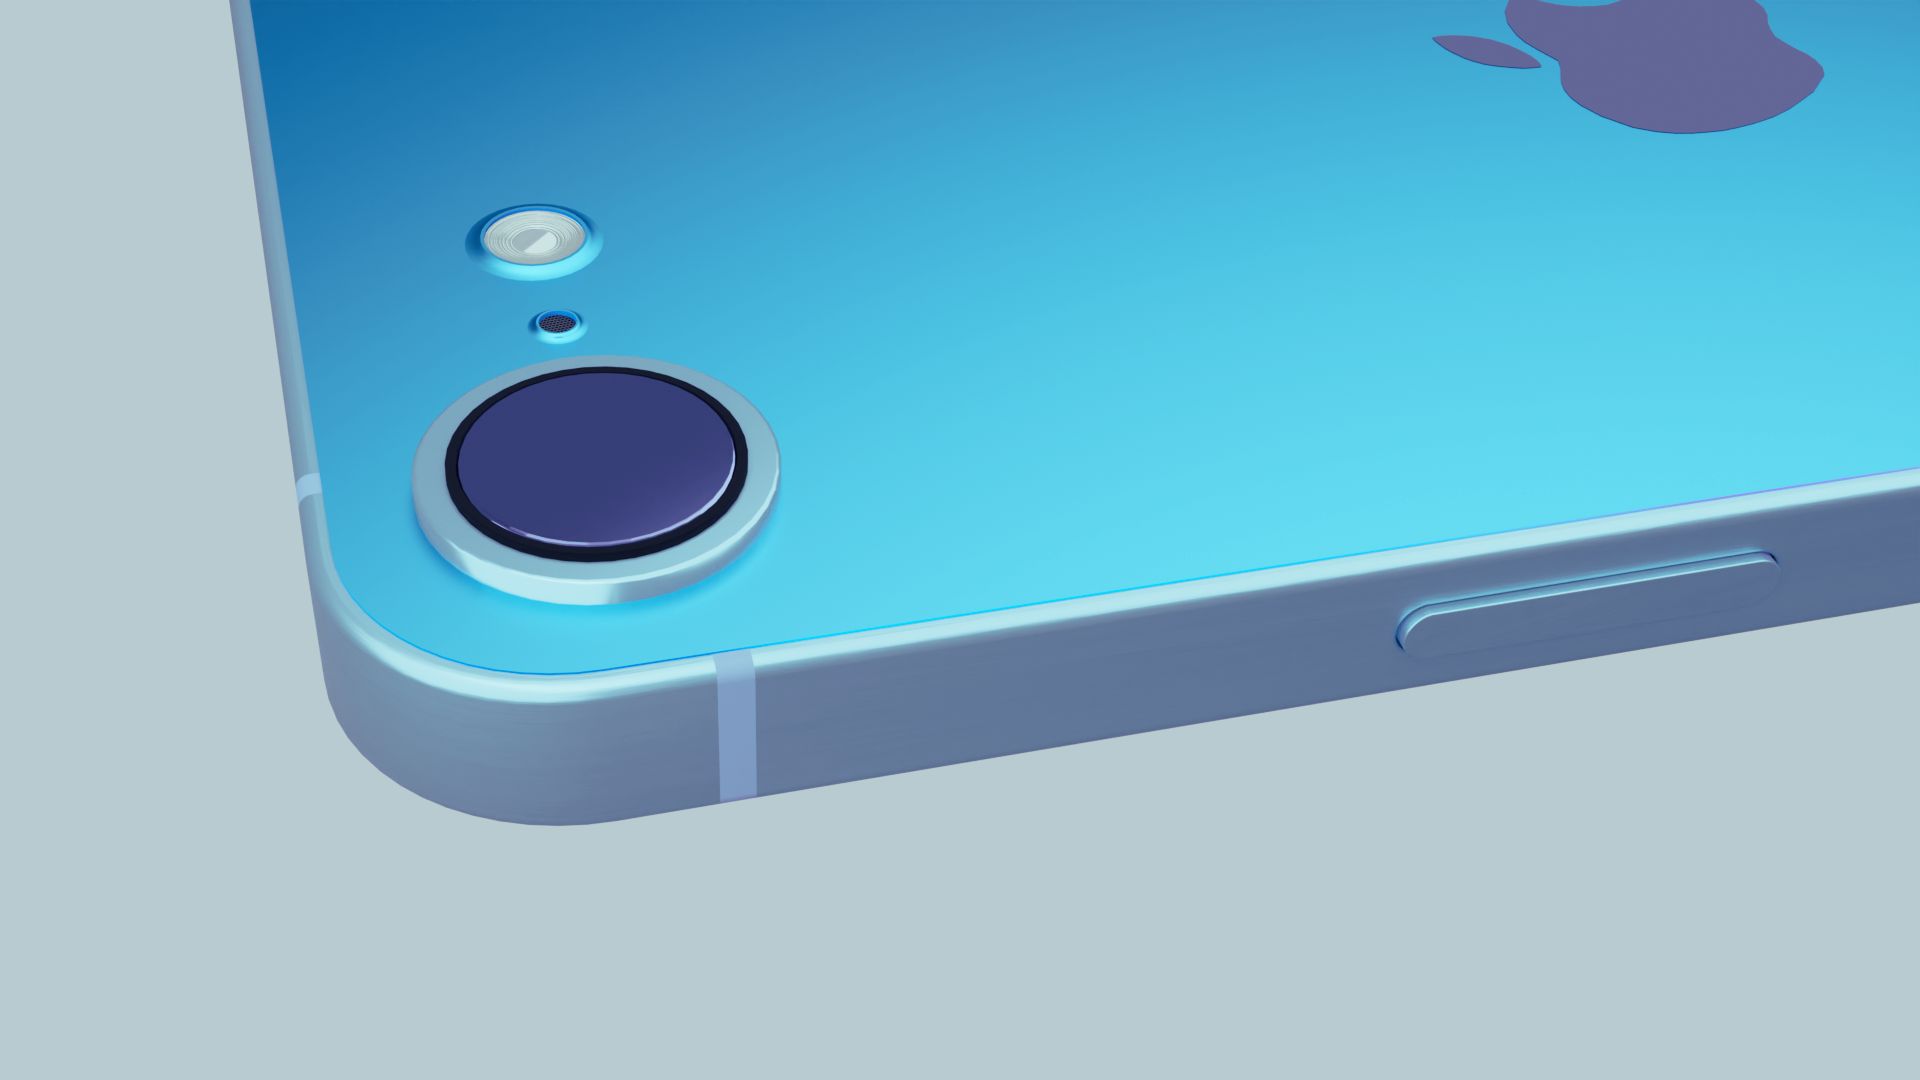 iPhone SE 4 render featuring single lens main camera